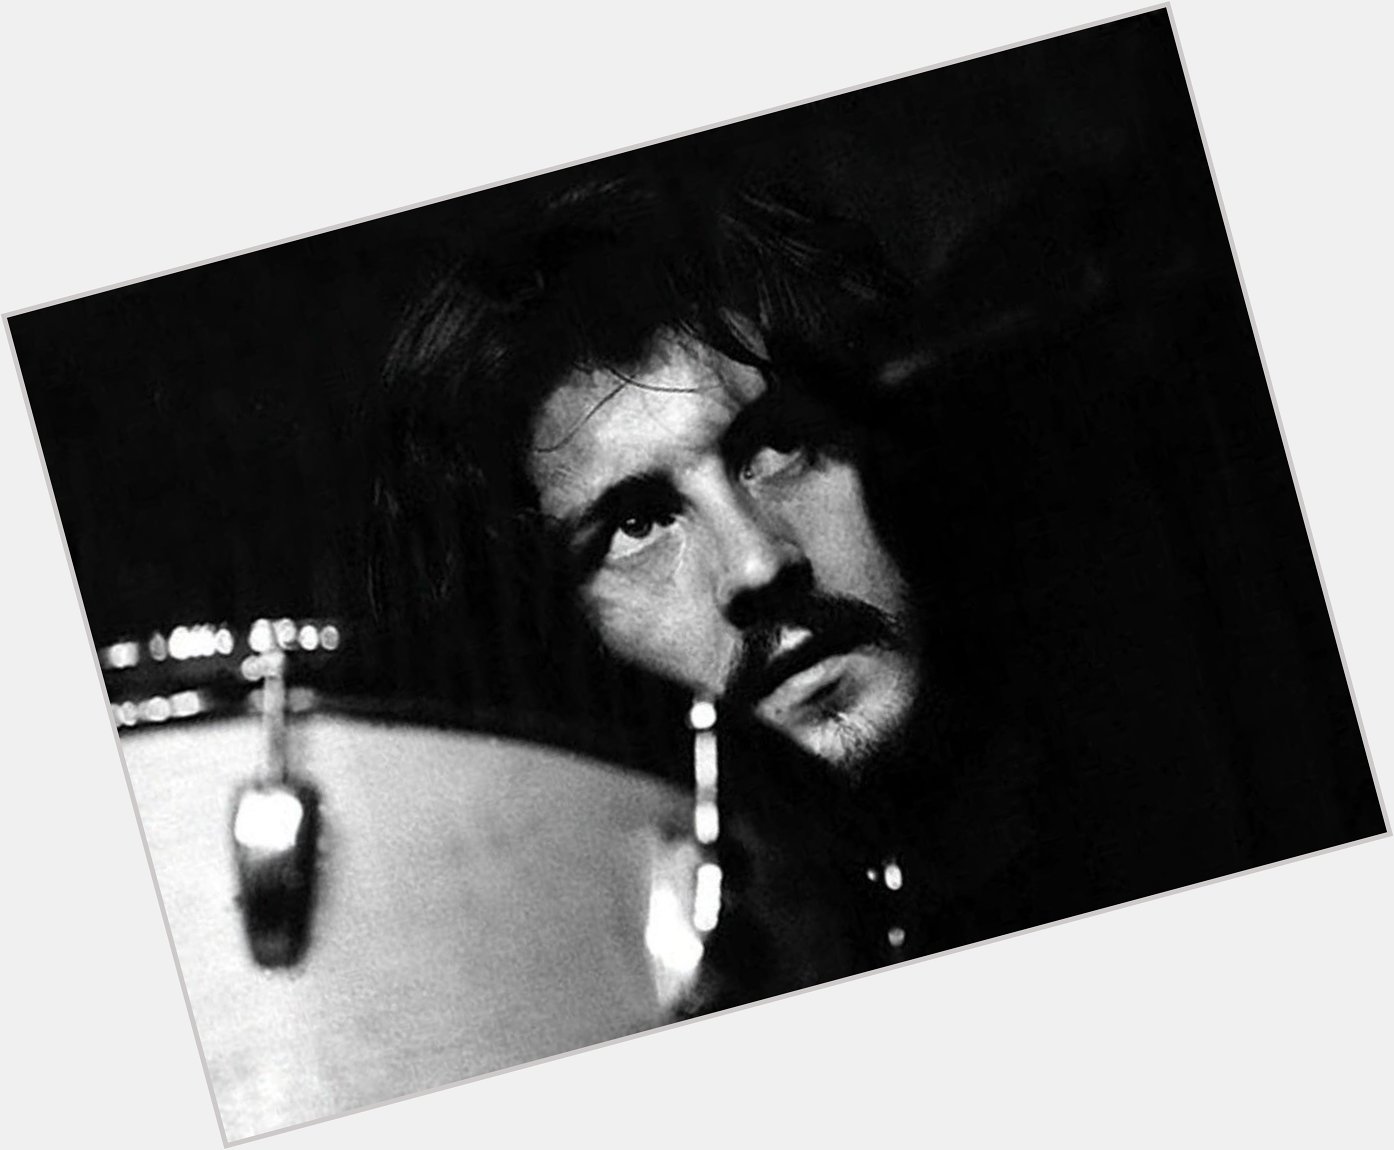 Happy Birthday to the greatest drummer to ever walk the Earth, John Bonham. RIP Bonzo 